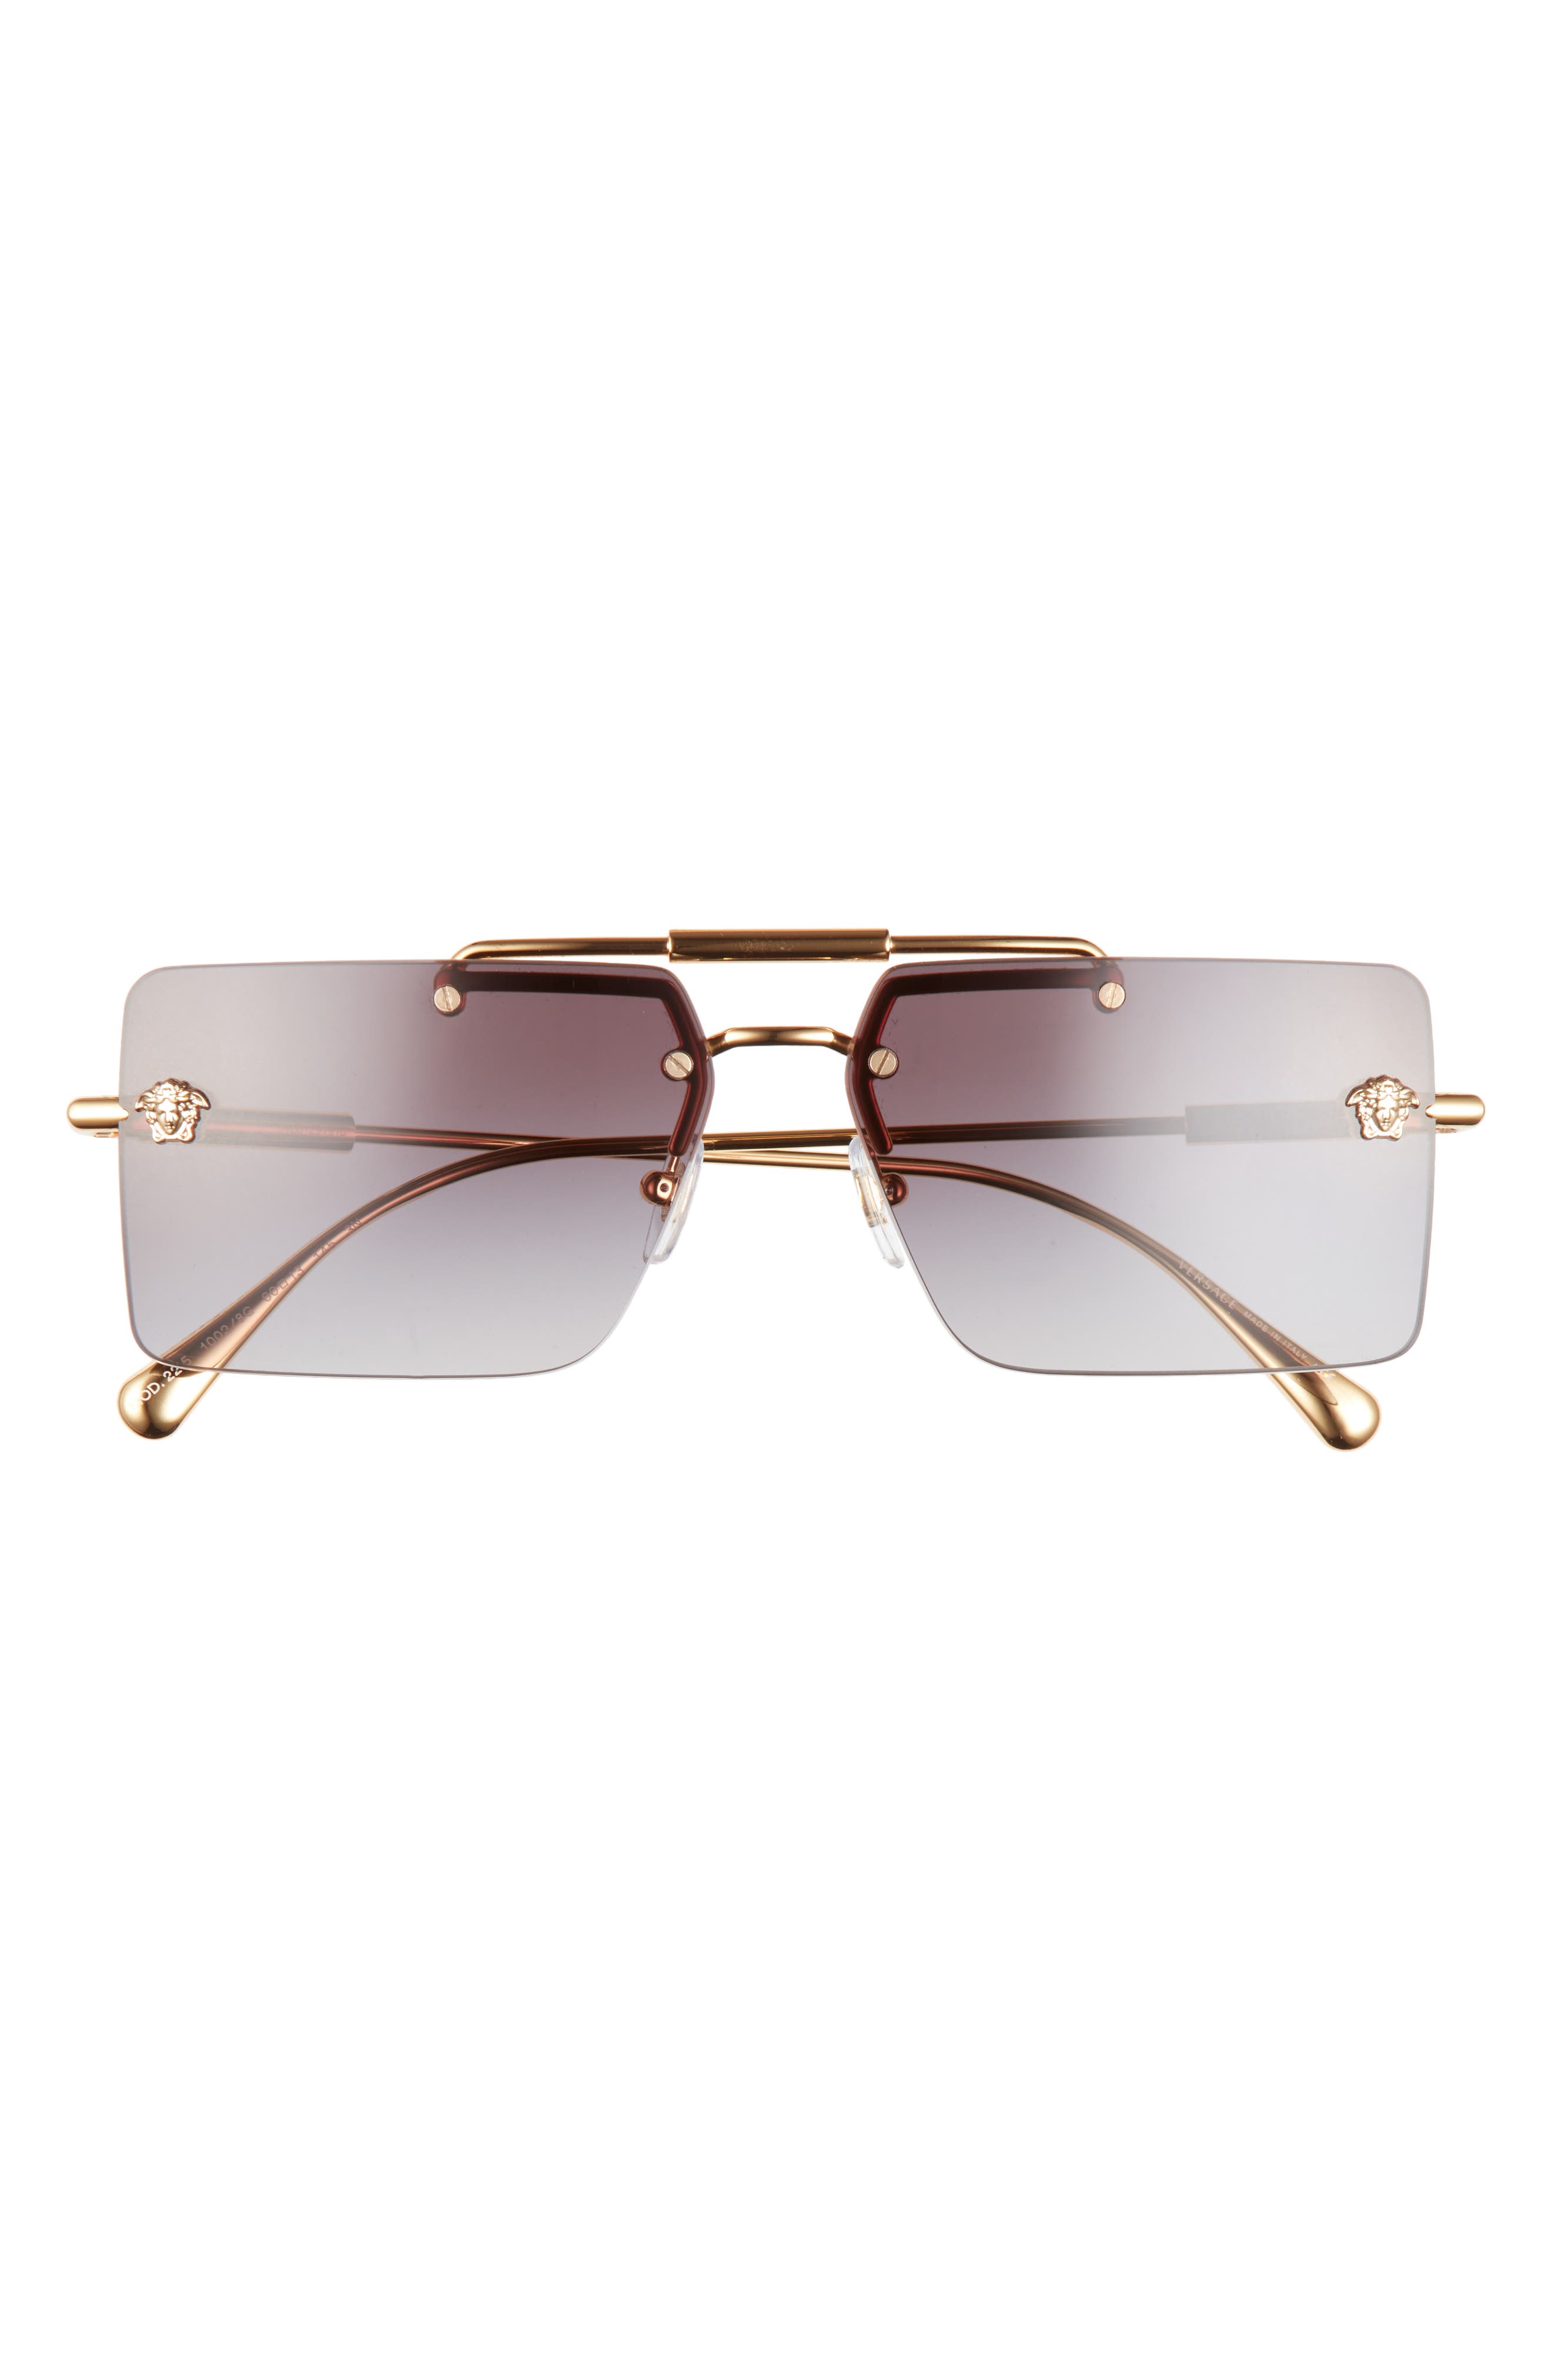 VERSACE 60mm Rectangular Sunglasses in Gold